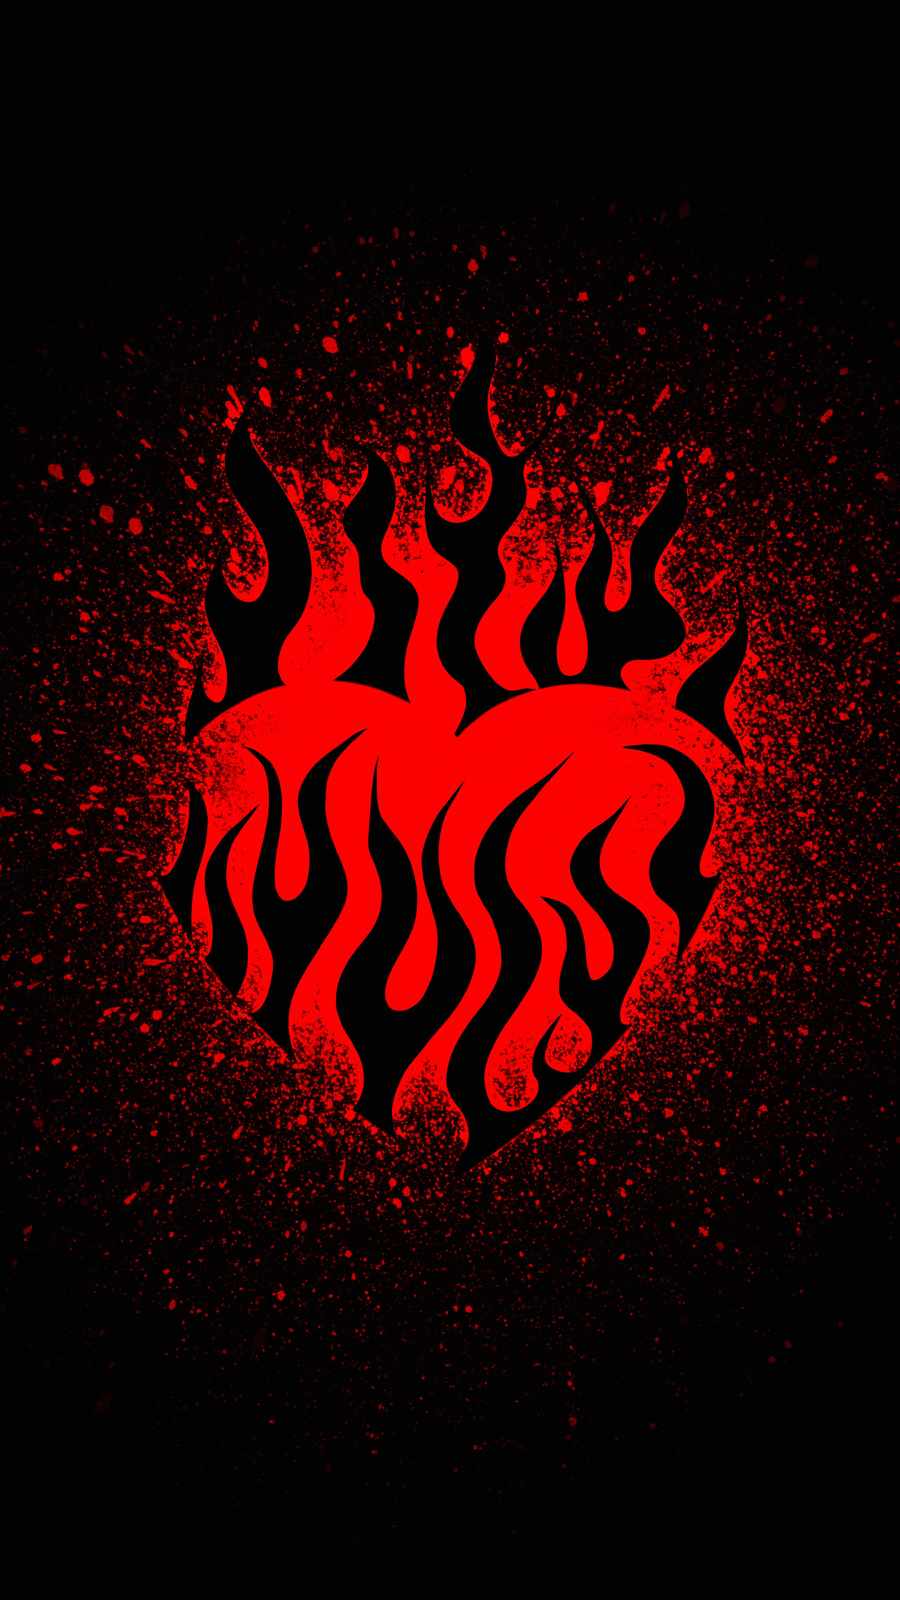 Burning Heart iPhone Wallpaper